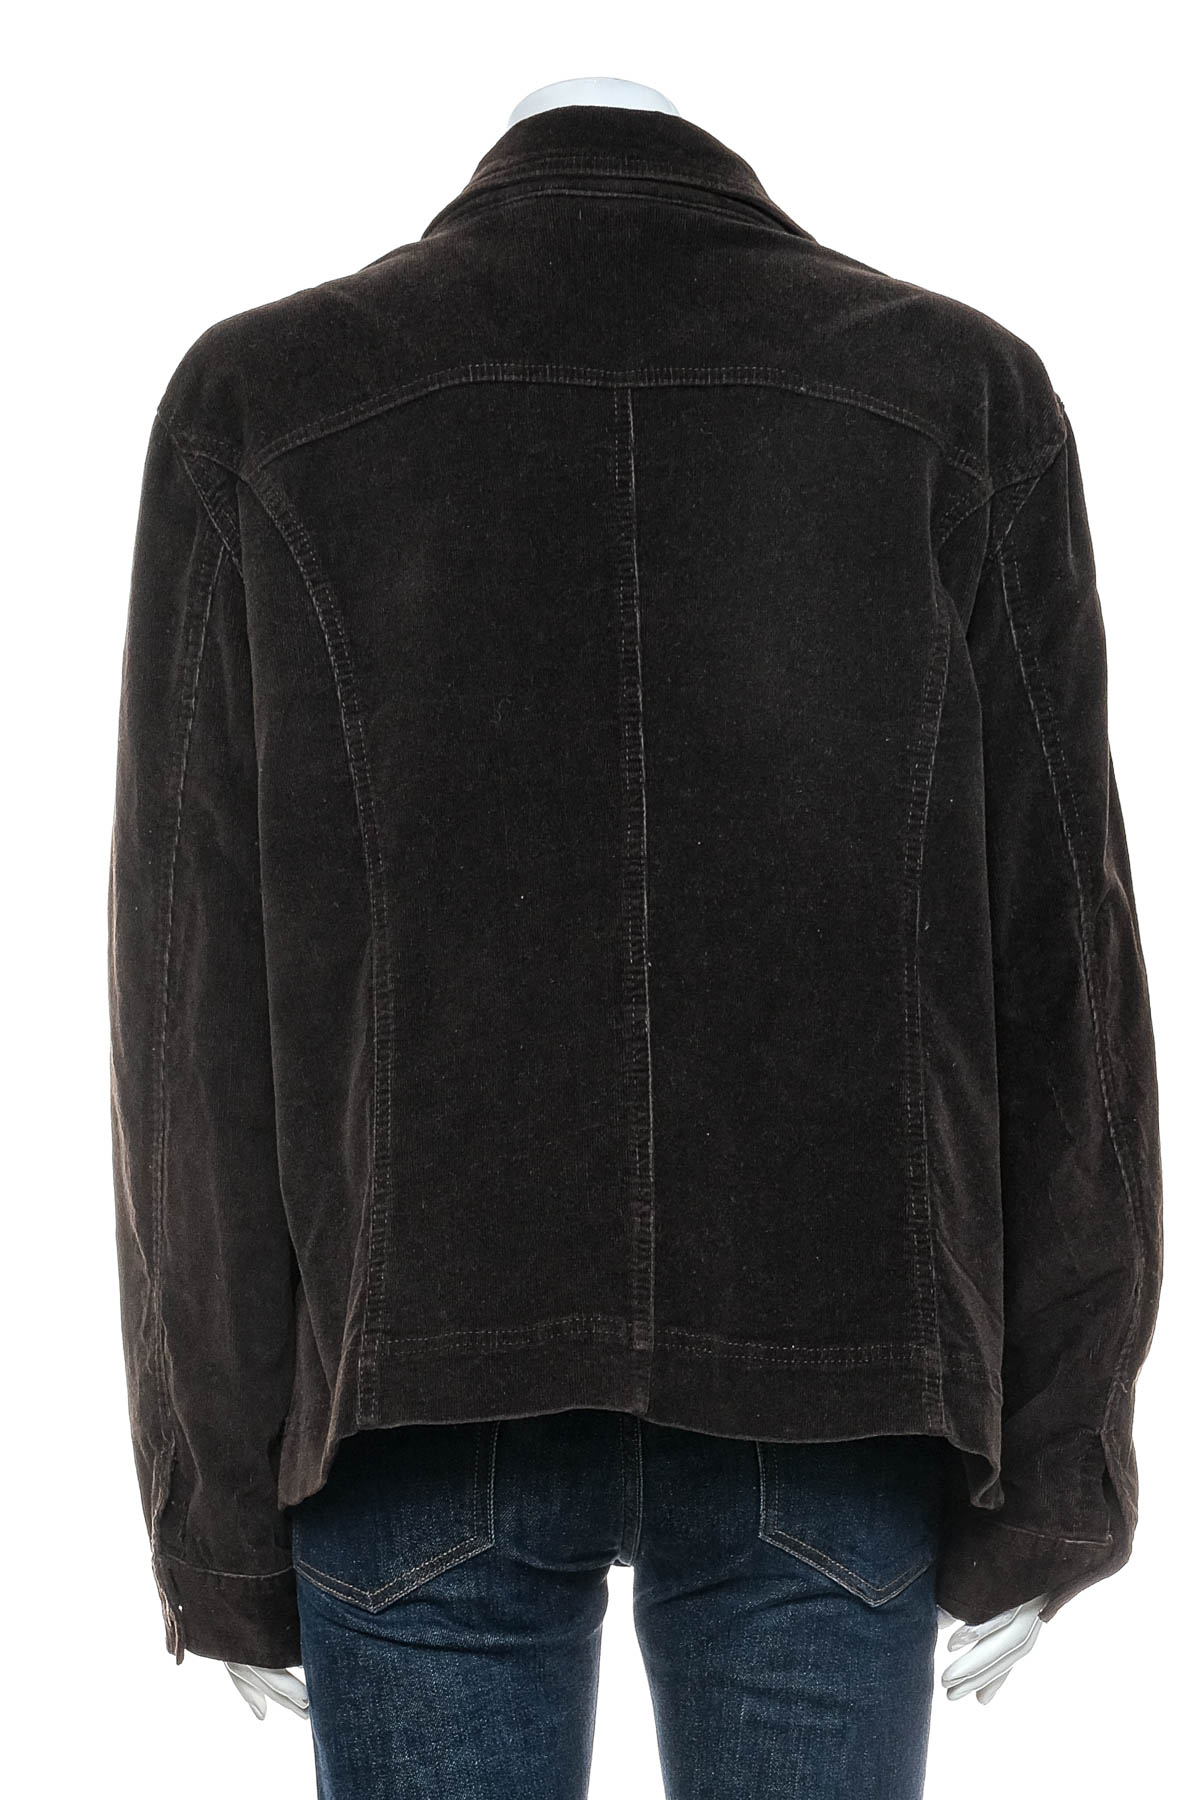 Female jacket - JM Collection - 1